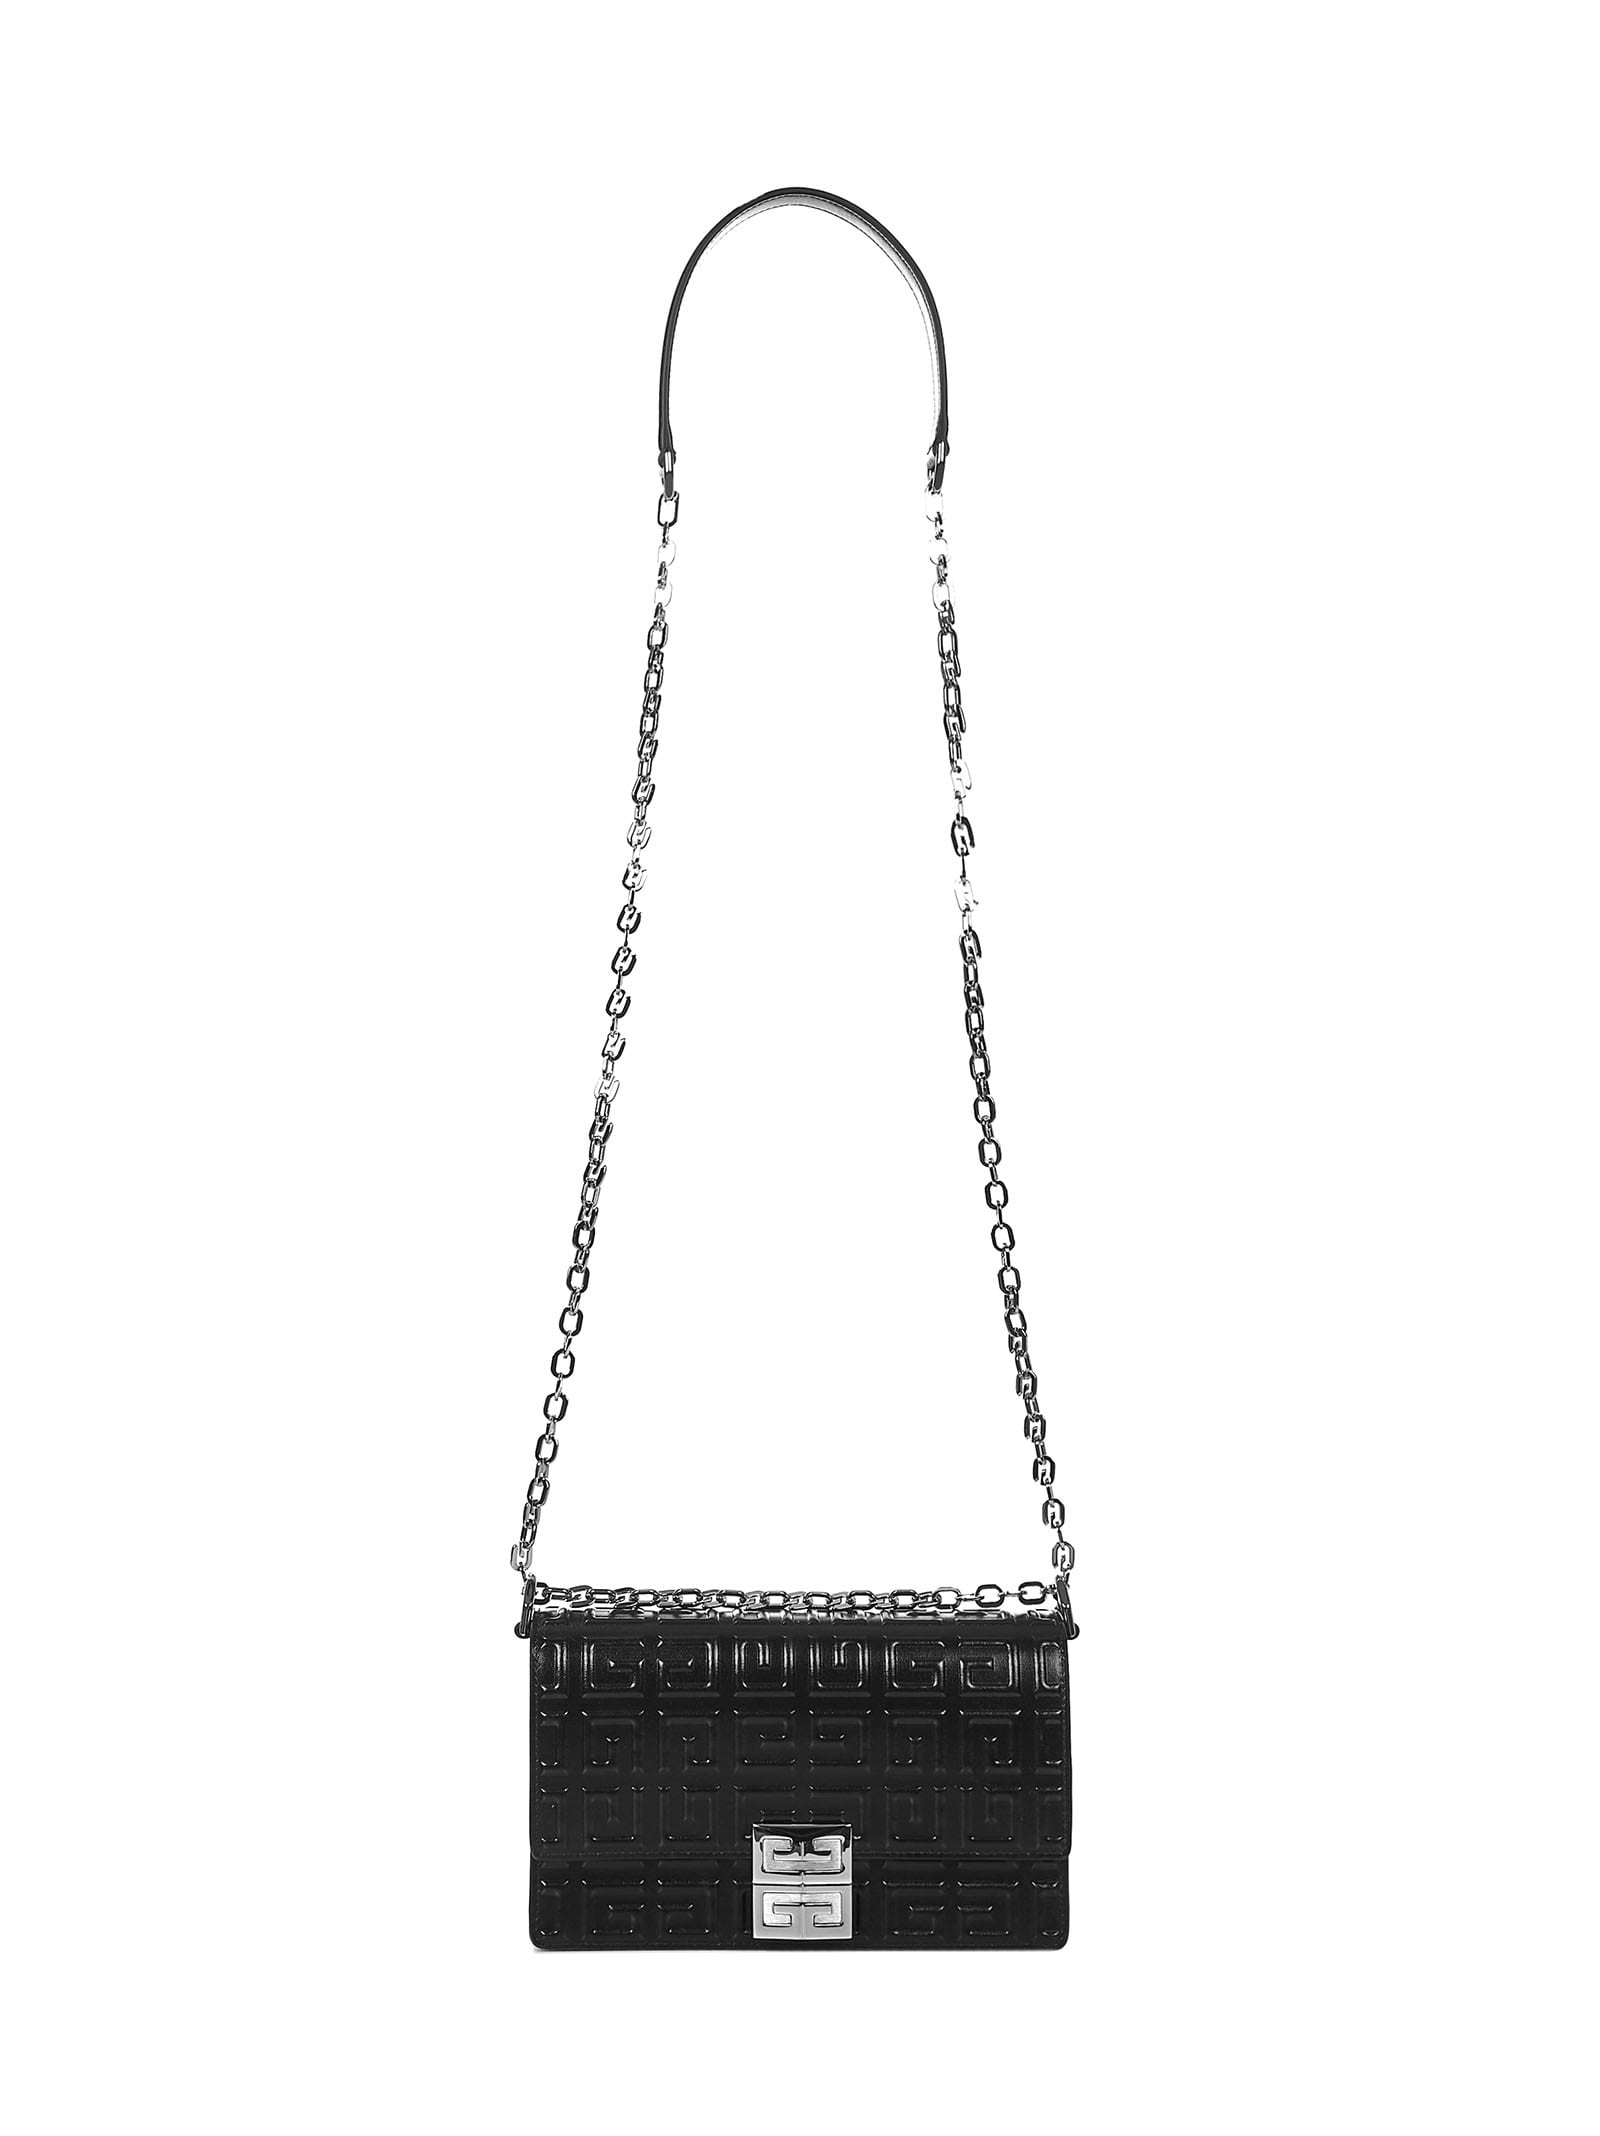 Givenchy 4g Small Shoulder Bag